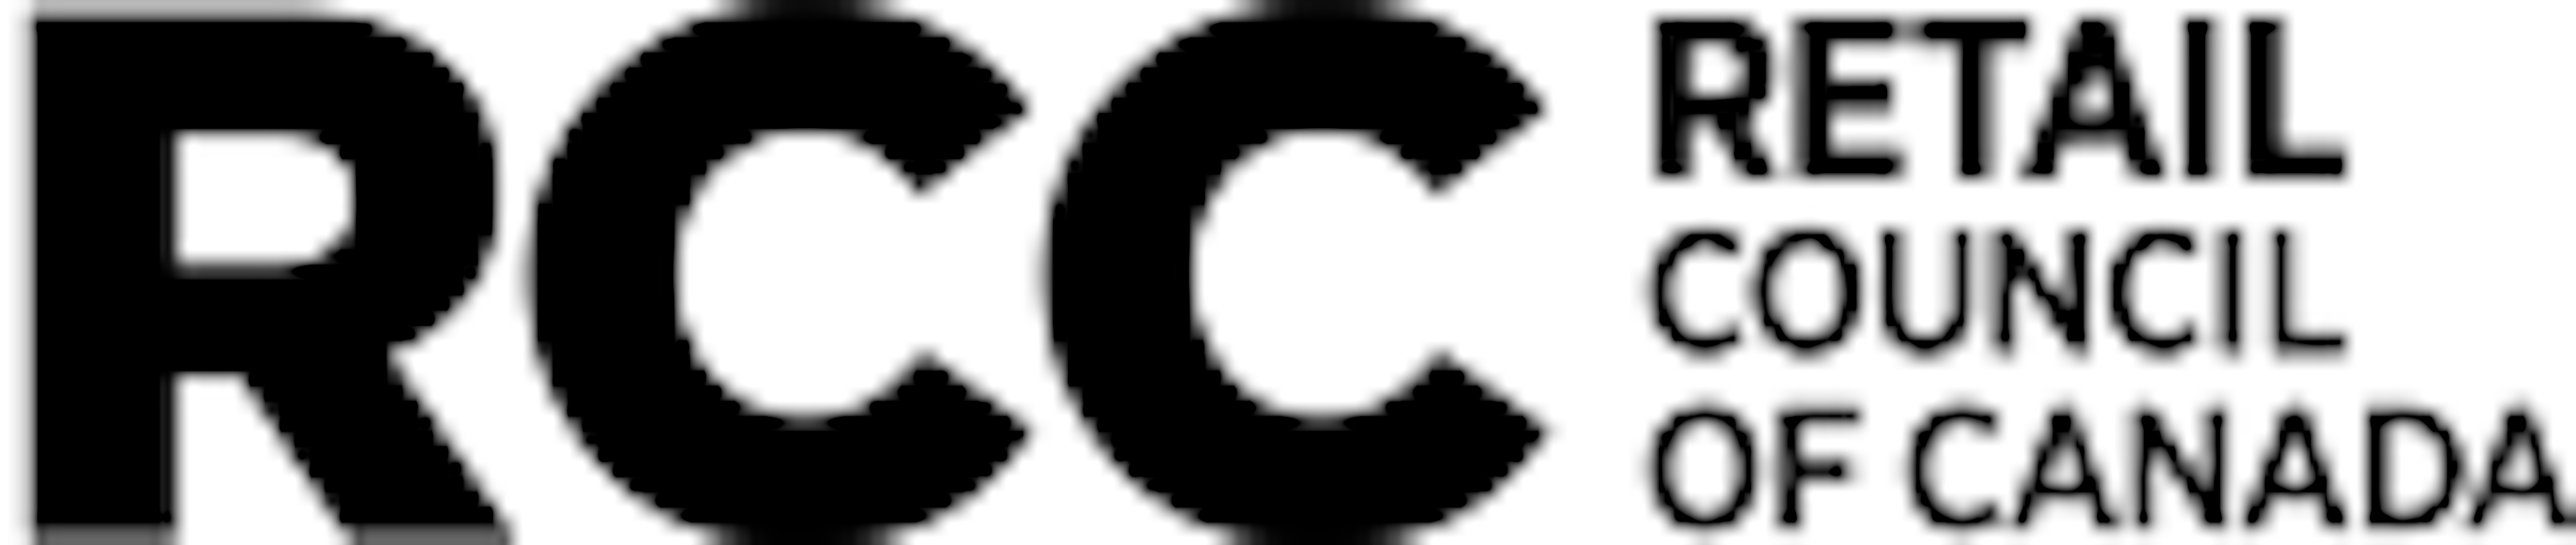 Retail Council of Canada’s logo.